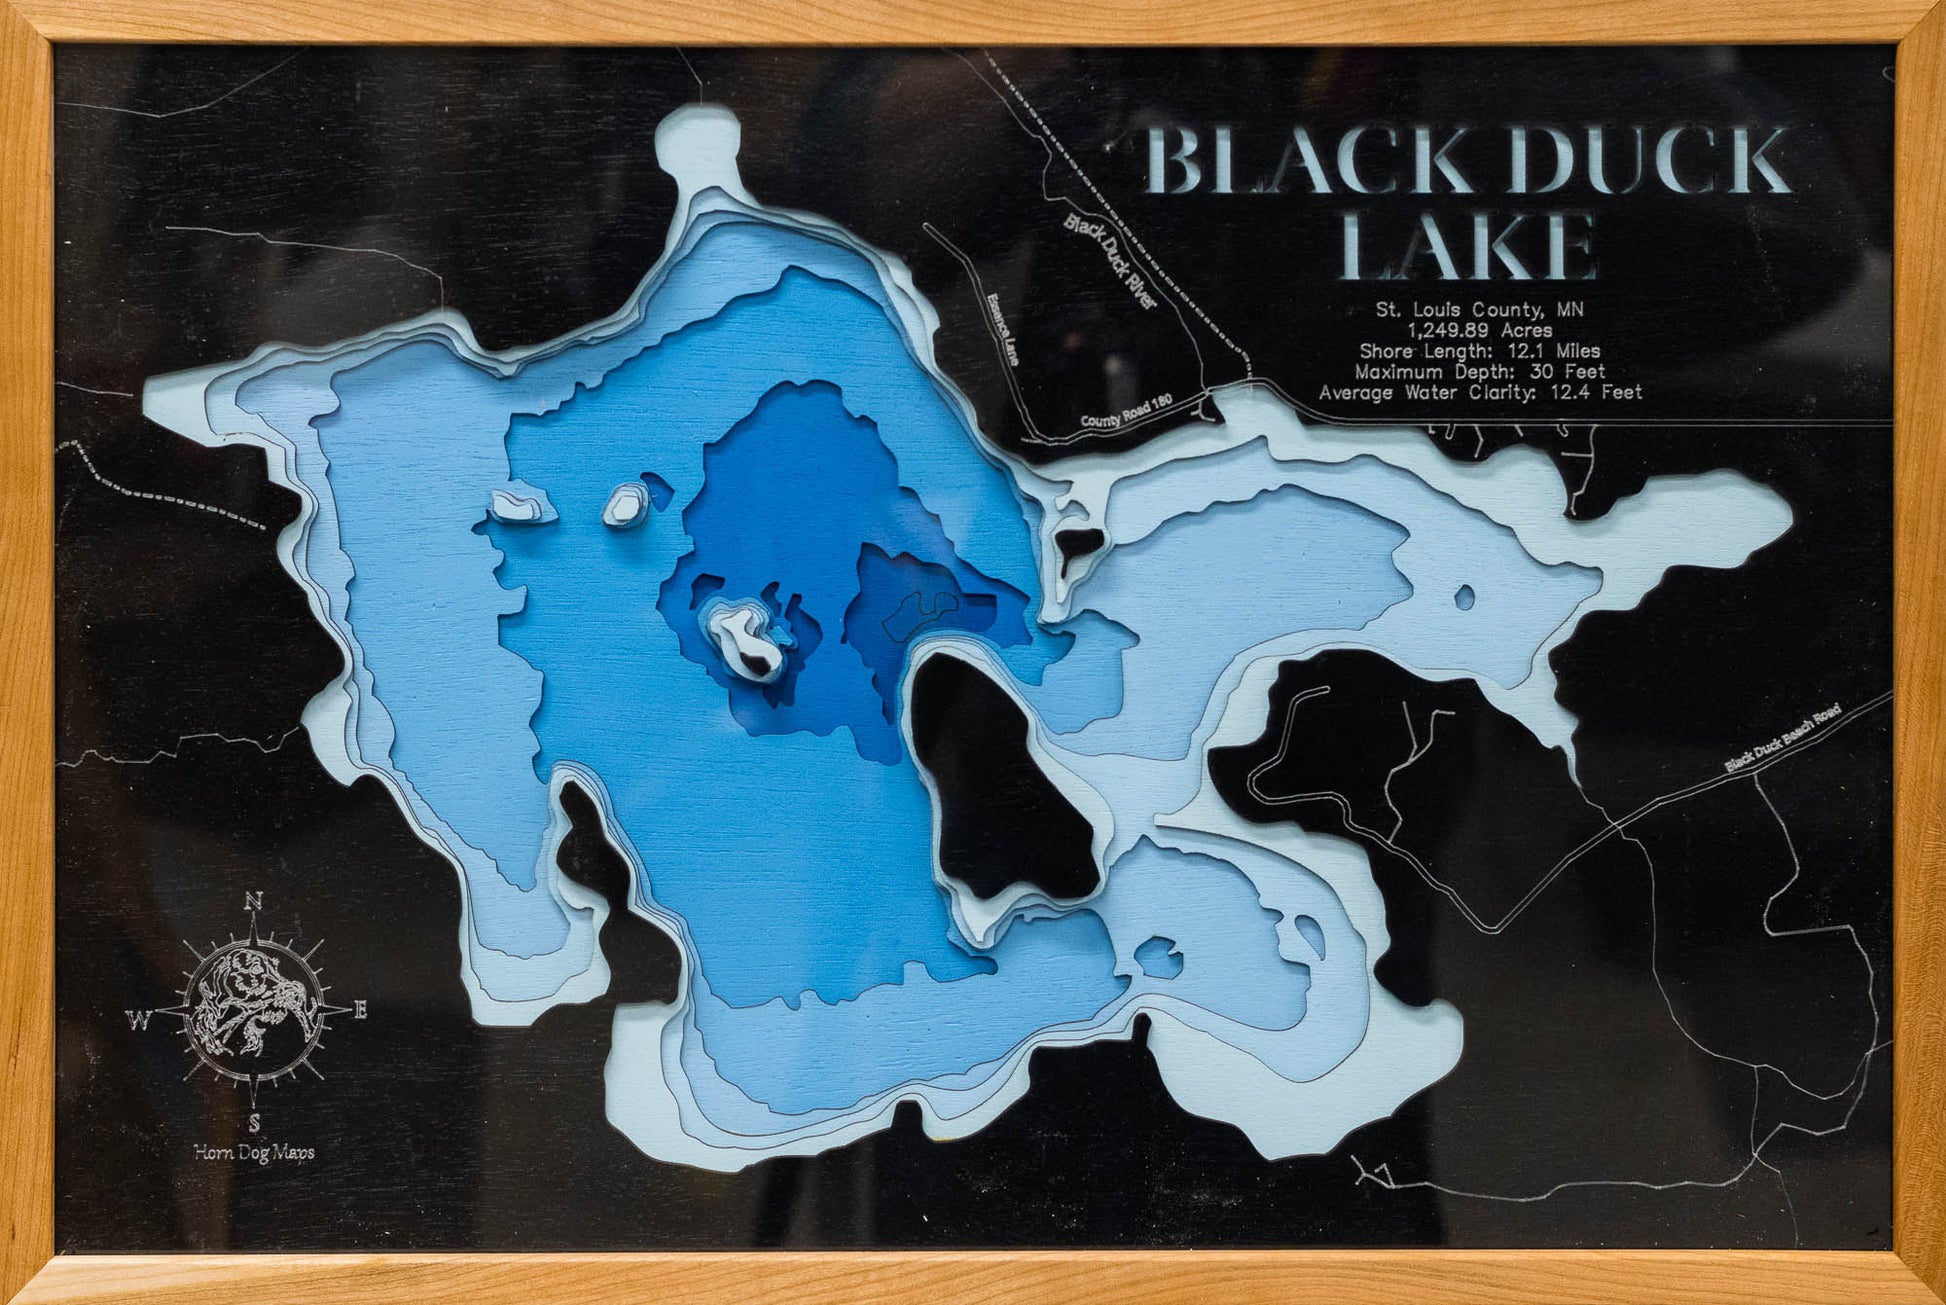 Black Duck Lake in St. Louis County, MN